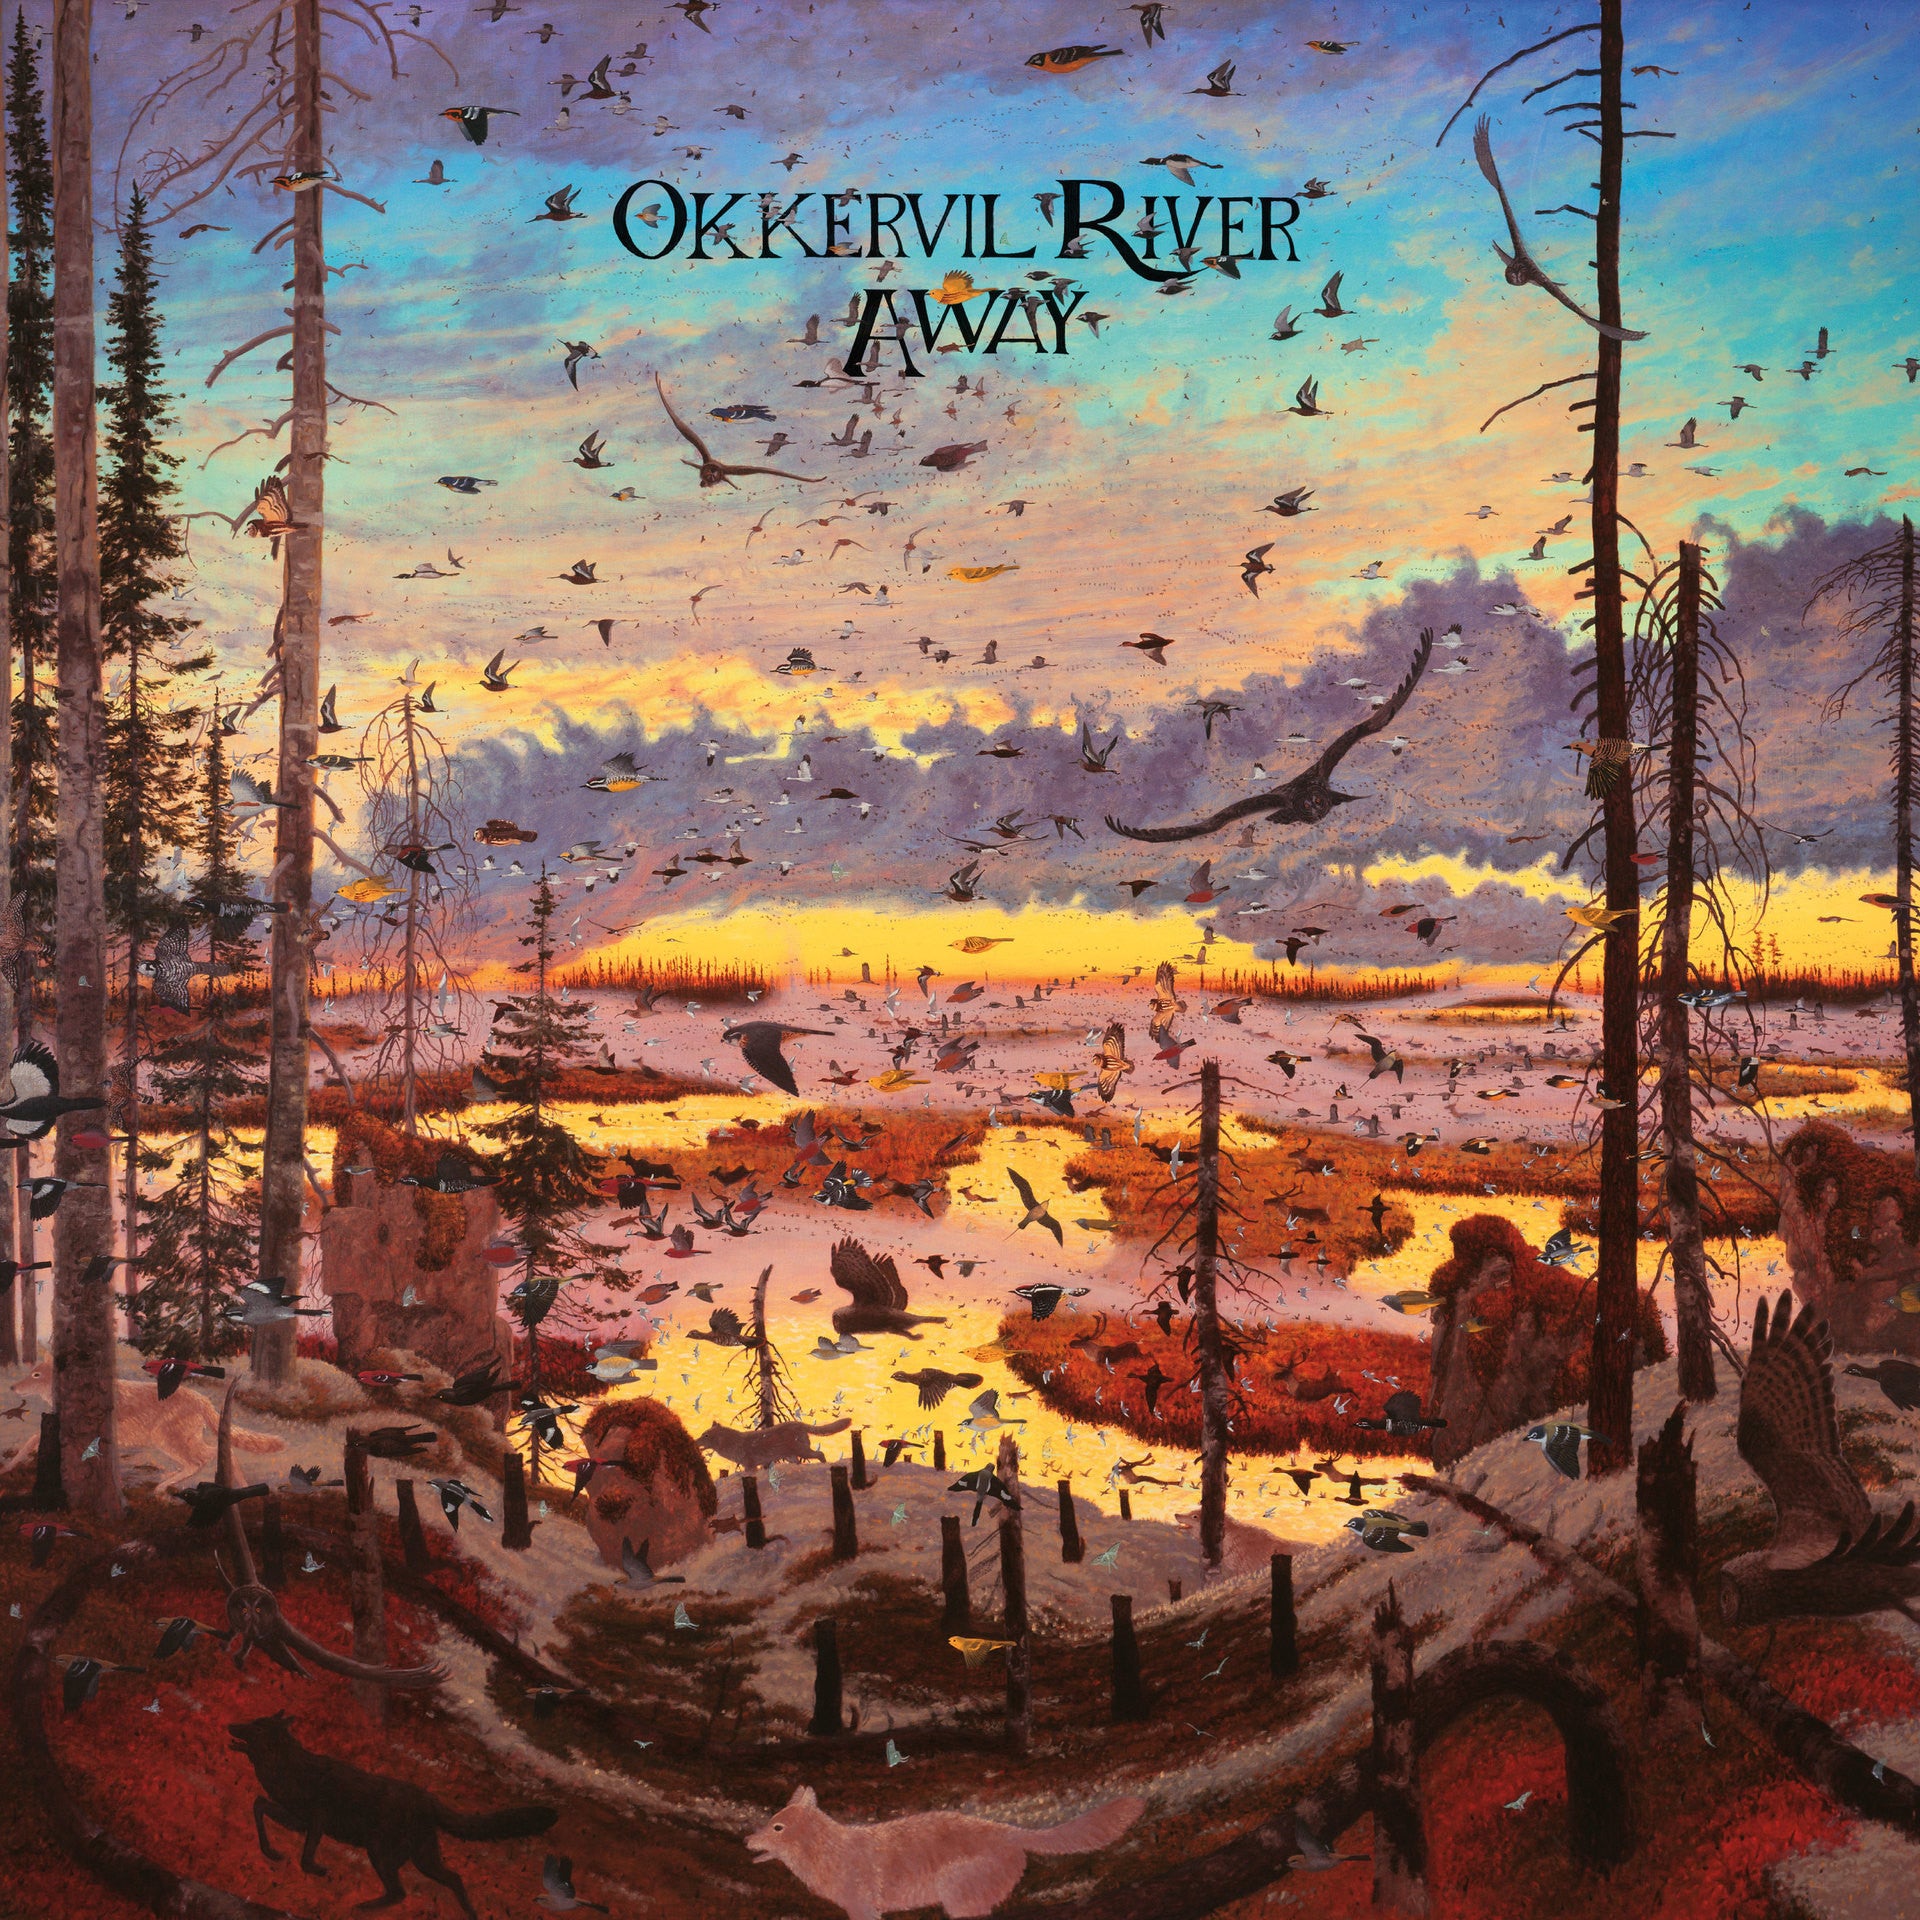 Okkervil River - Away - New LP Record 2016 ATO Vinyl & Download - Indie / Folk-Rock / Alt-Country